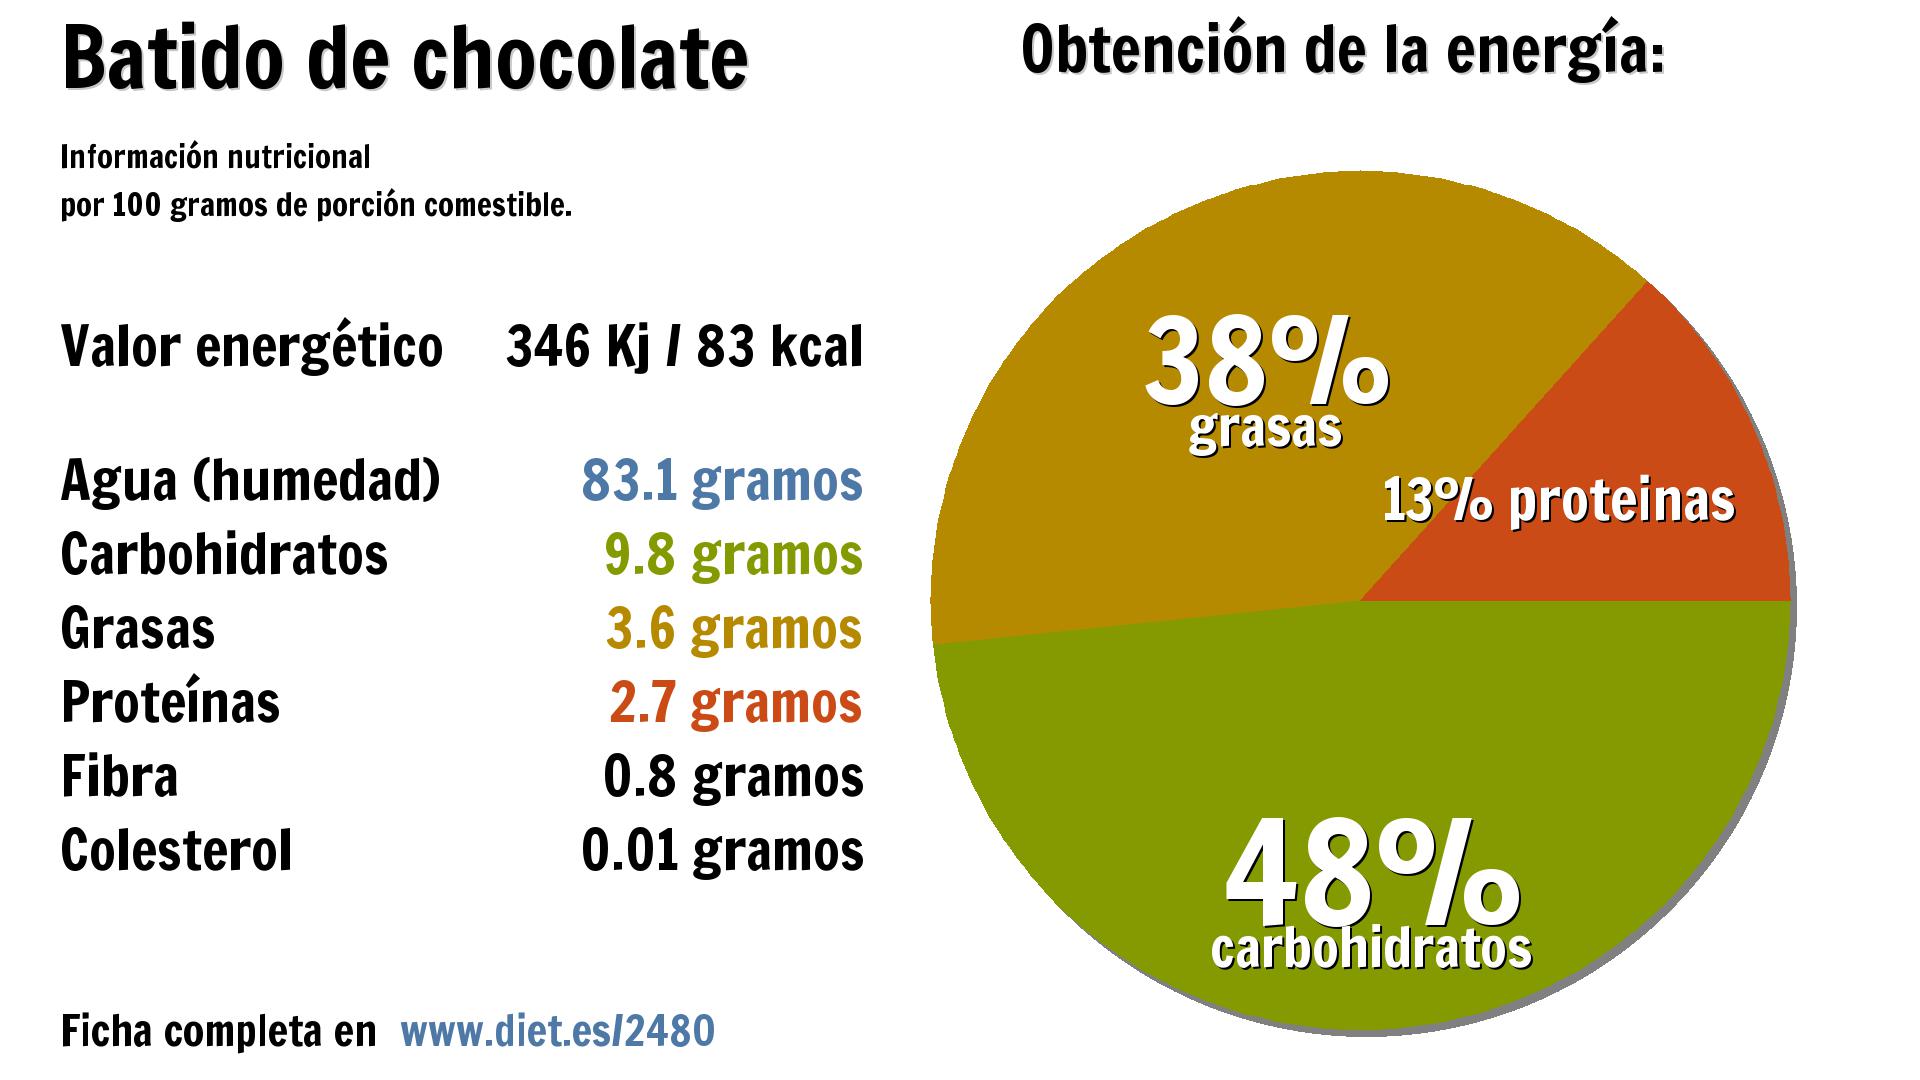 Batido de chocolate: energía 346 Kj, agua 83 g., carbohidratos 10 g., grasas 4 g., proteínas 3 g. y fibra 1 g.